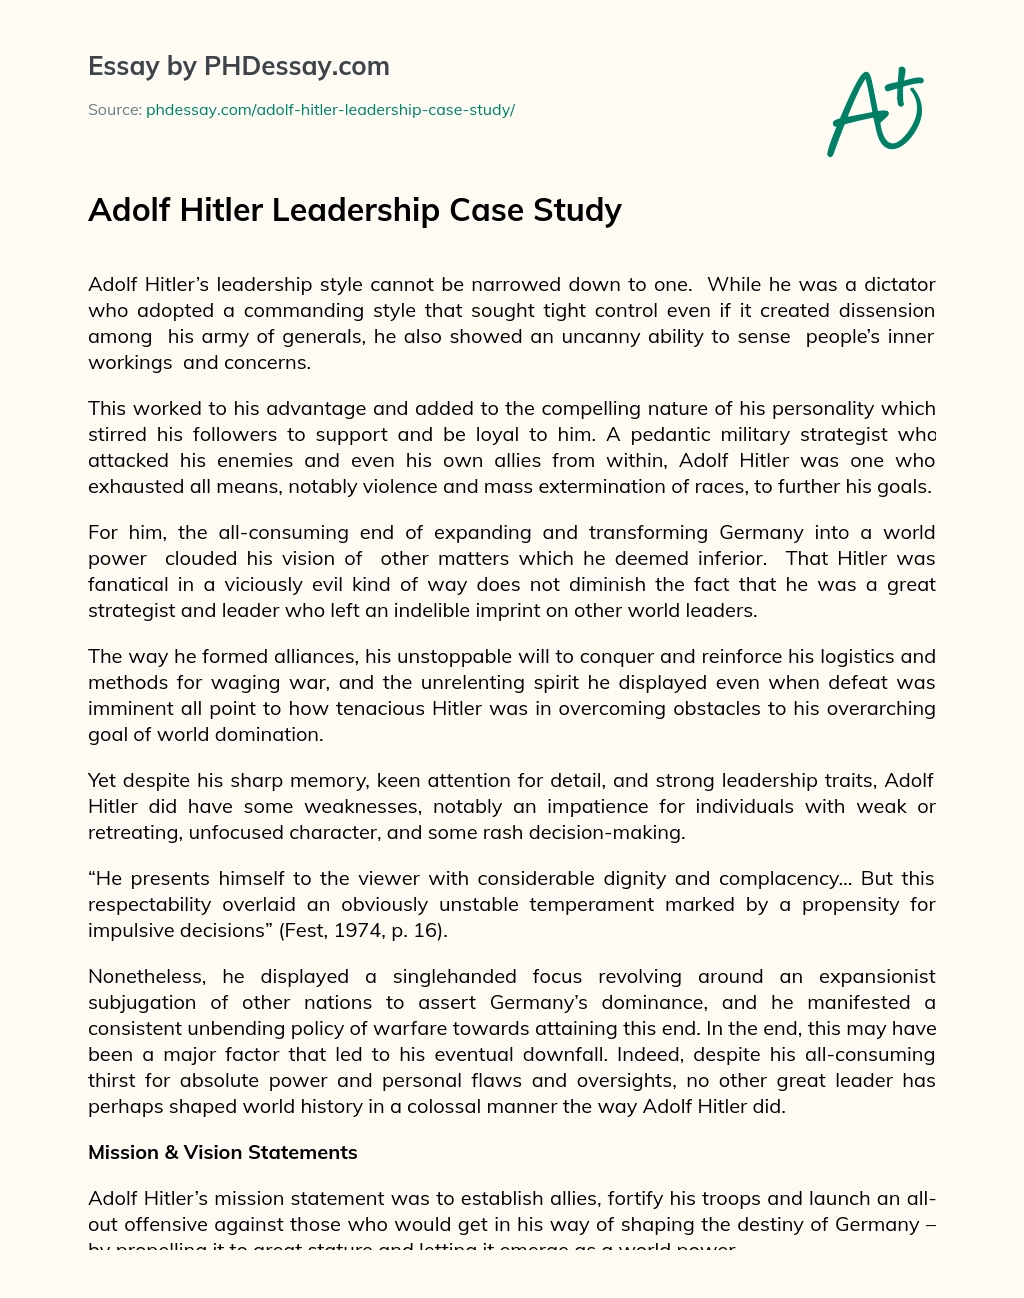 Adolf Hitler Leadership Case Study essay